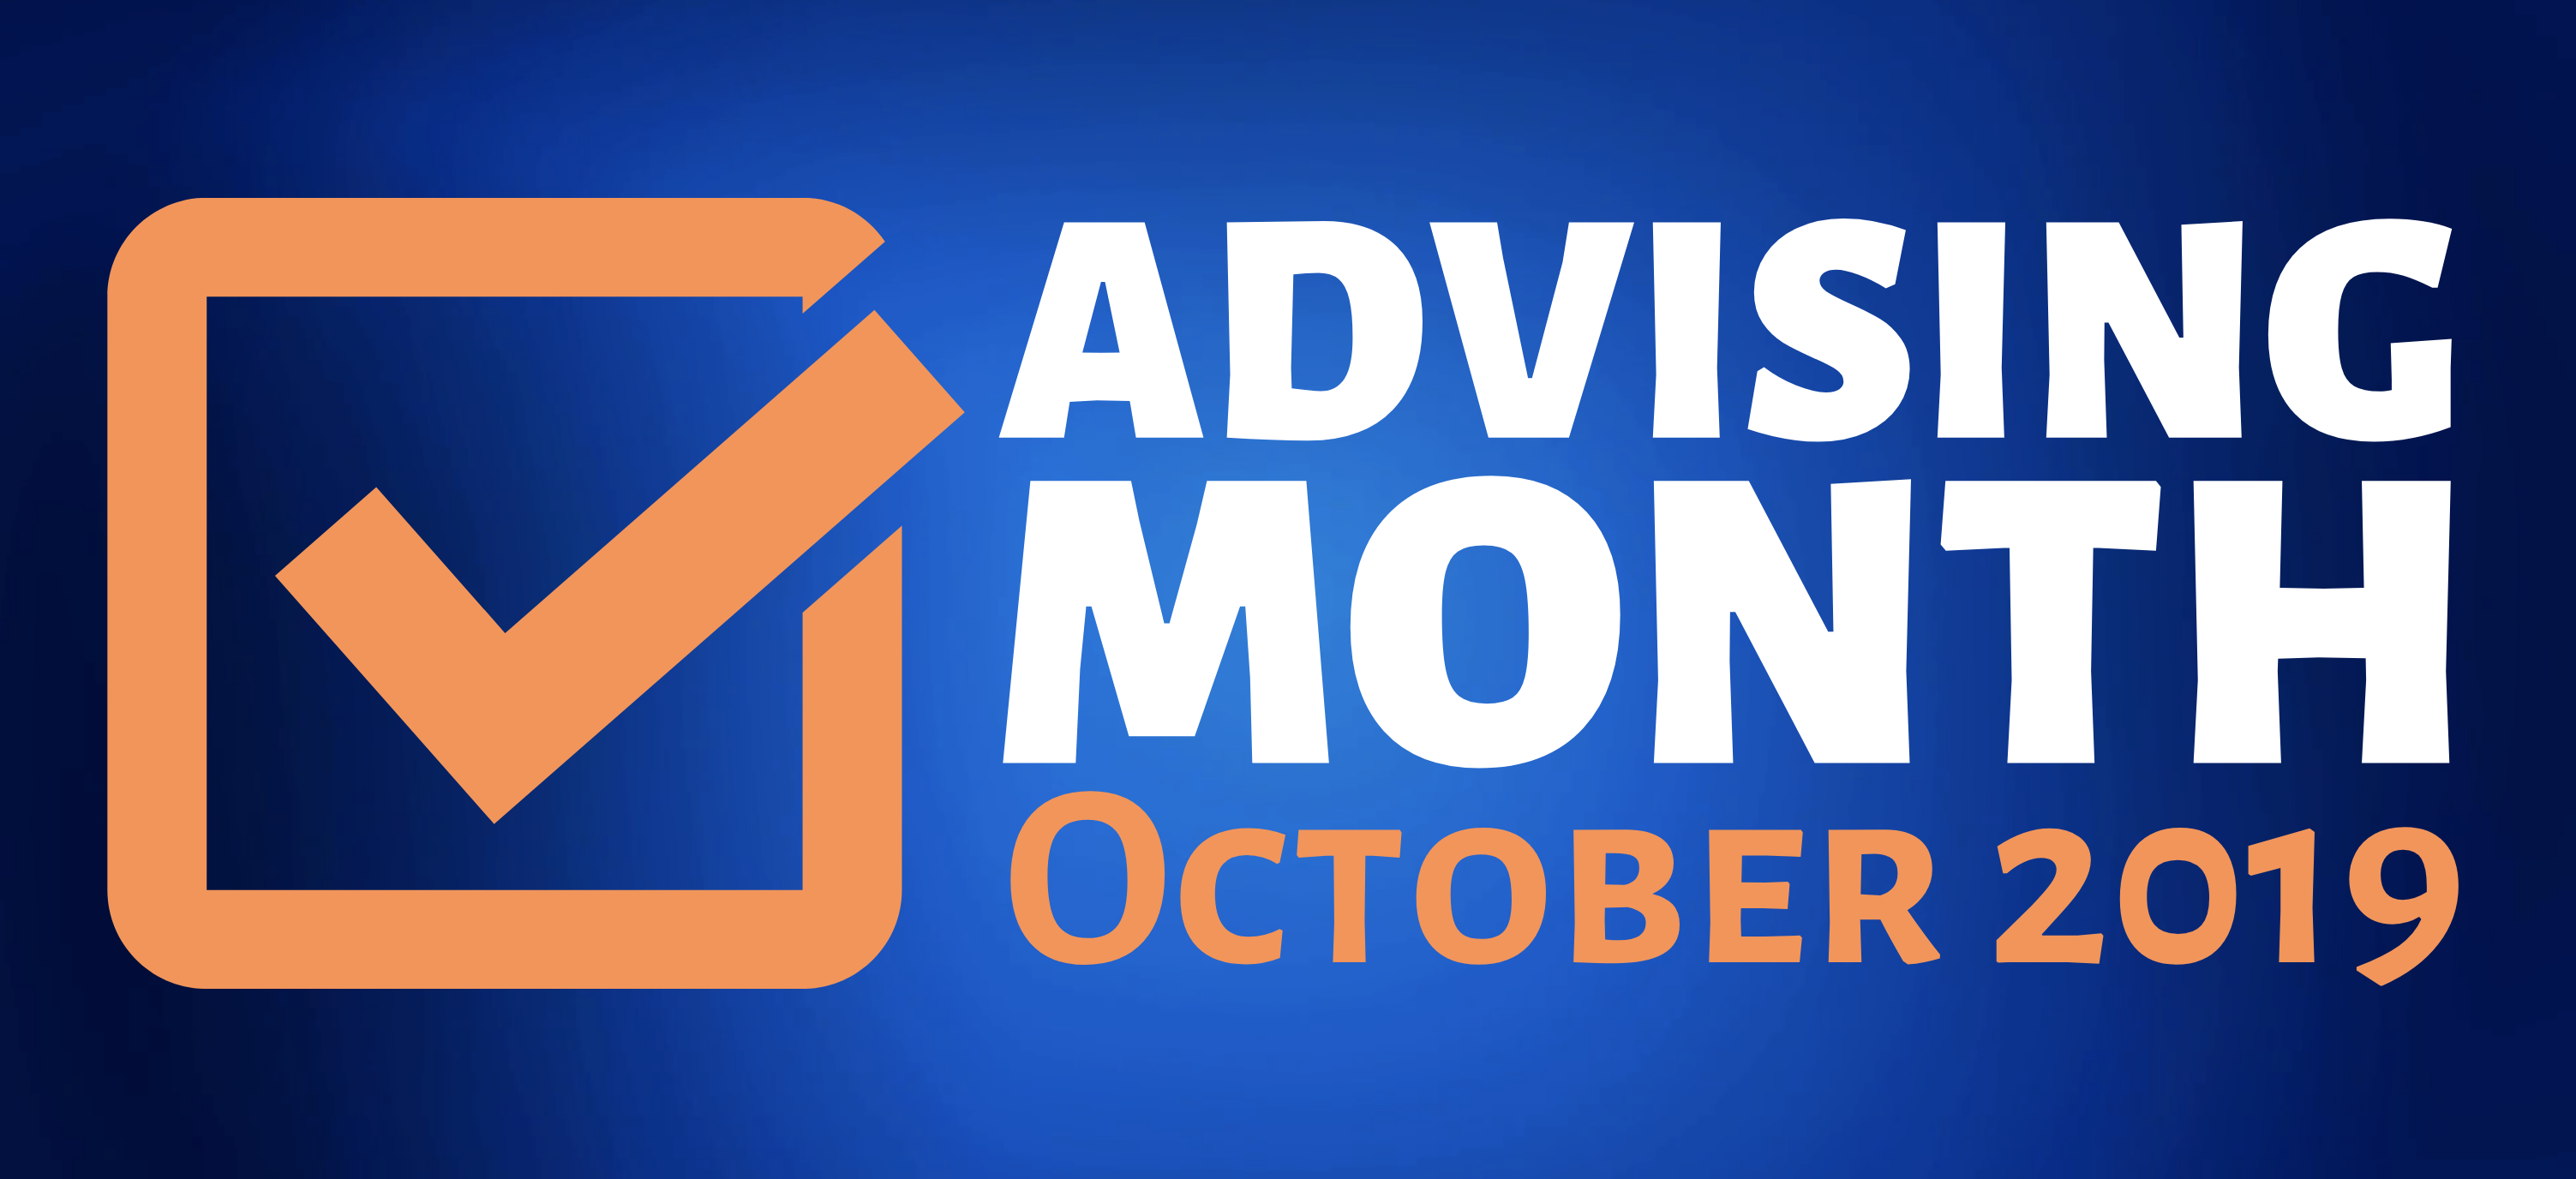 October Advising Month 2019